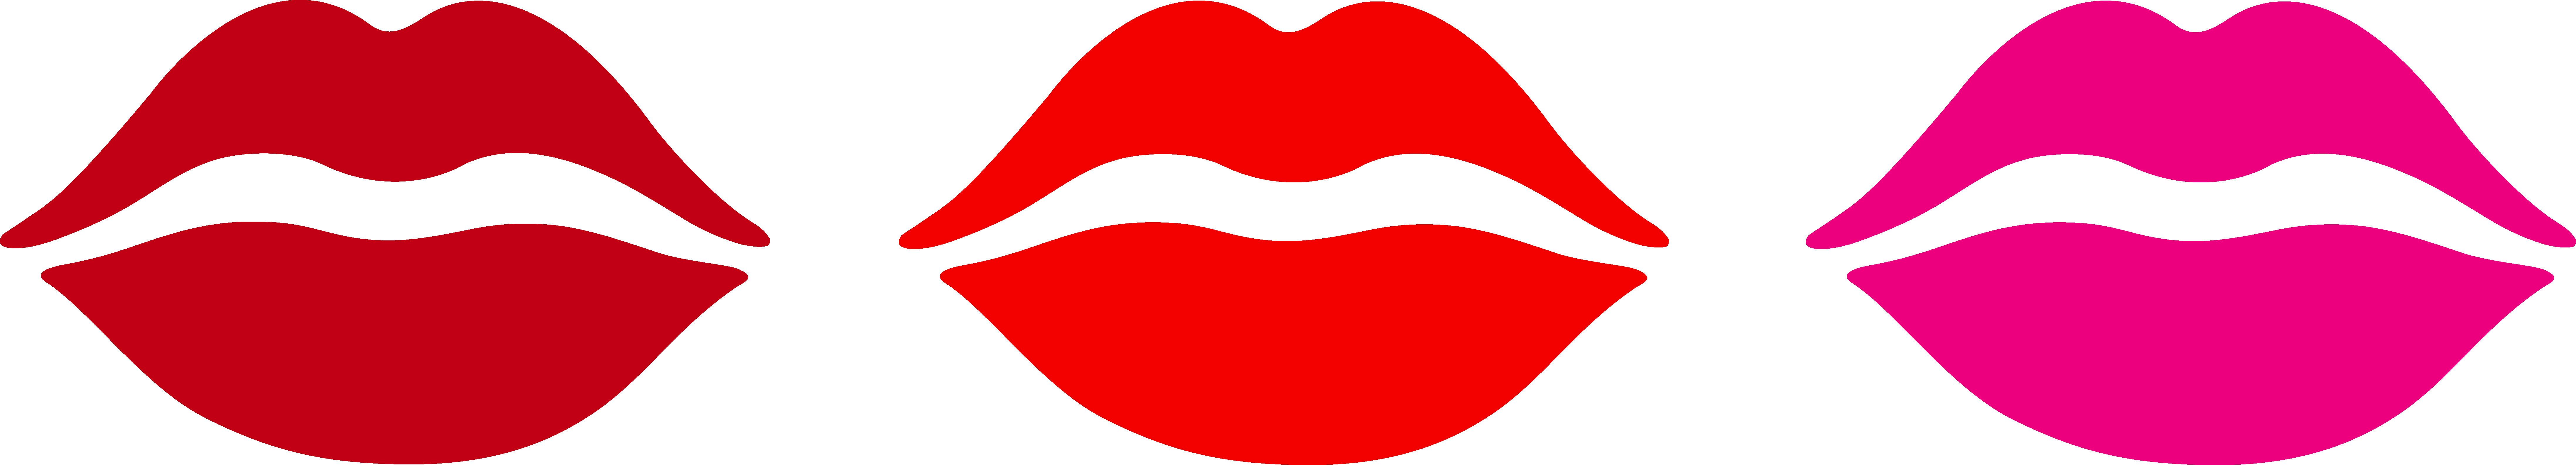 Blowing Kiss Emoji Faces Clip